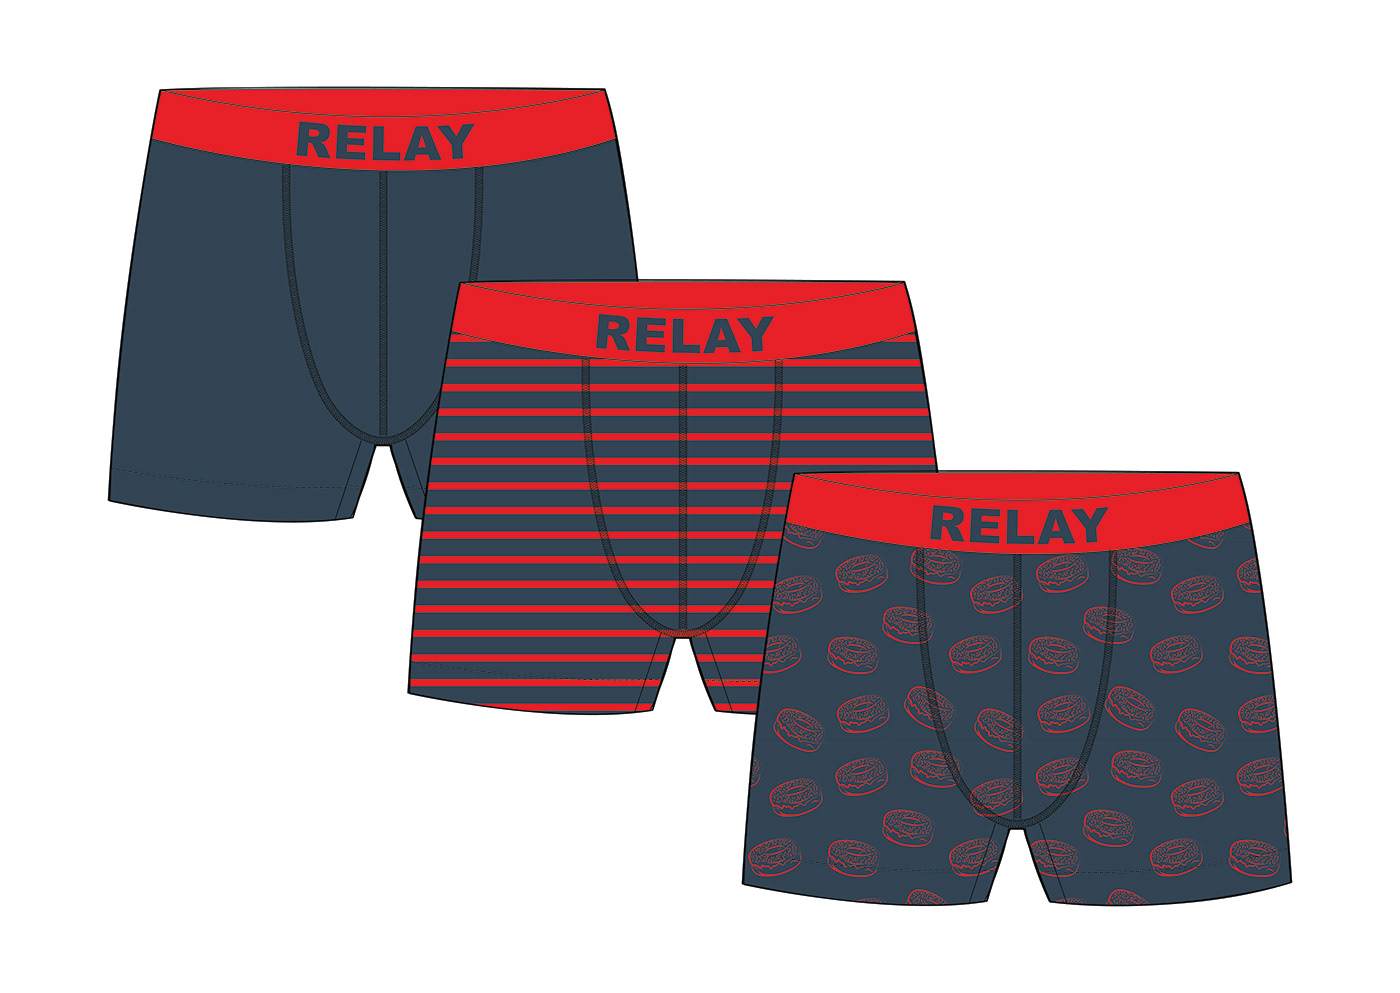 relay Menswear technical drawing fashion design digital design Prints Design Repeat Pattern underwear tfg all over print